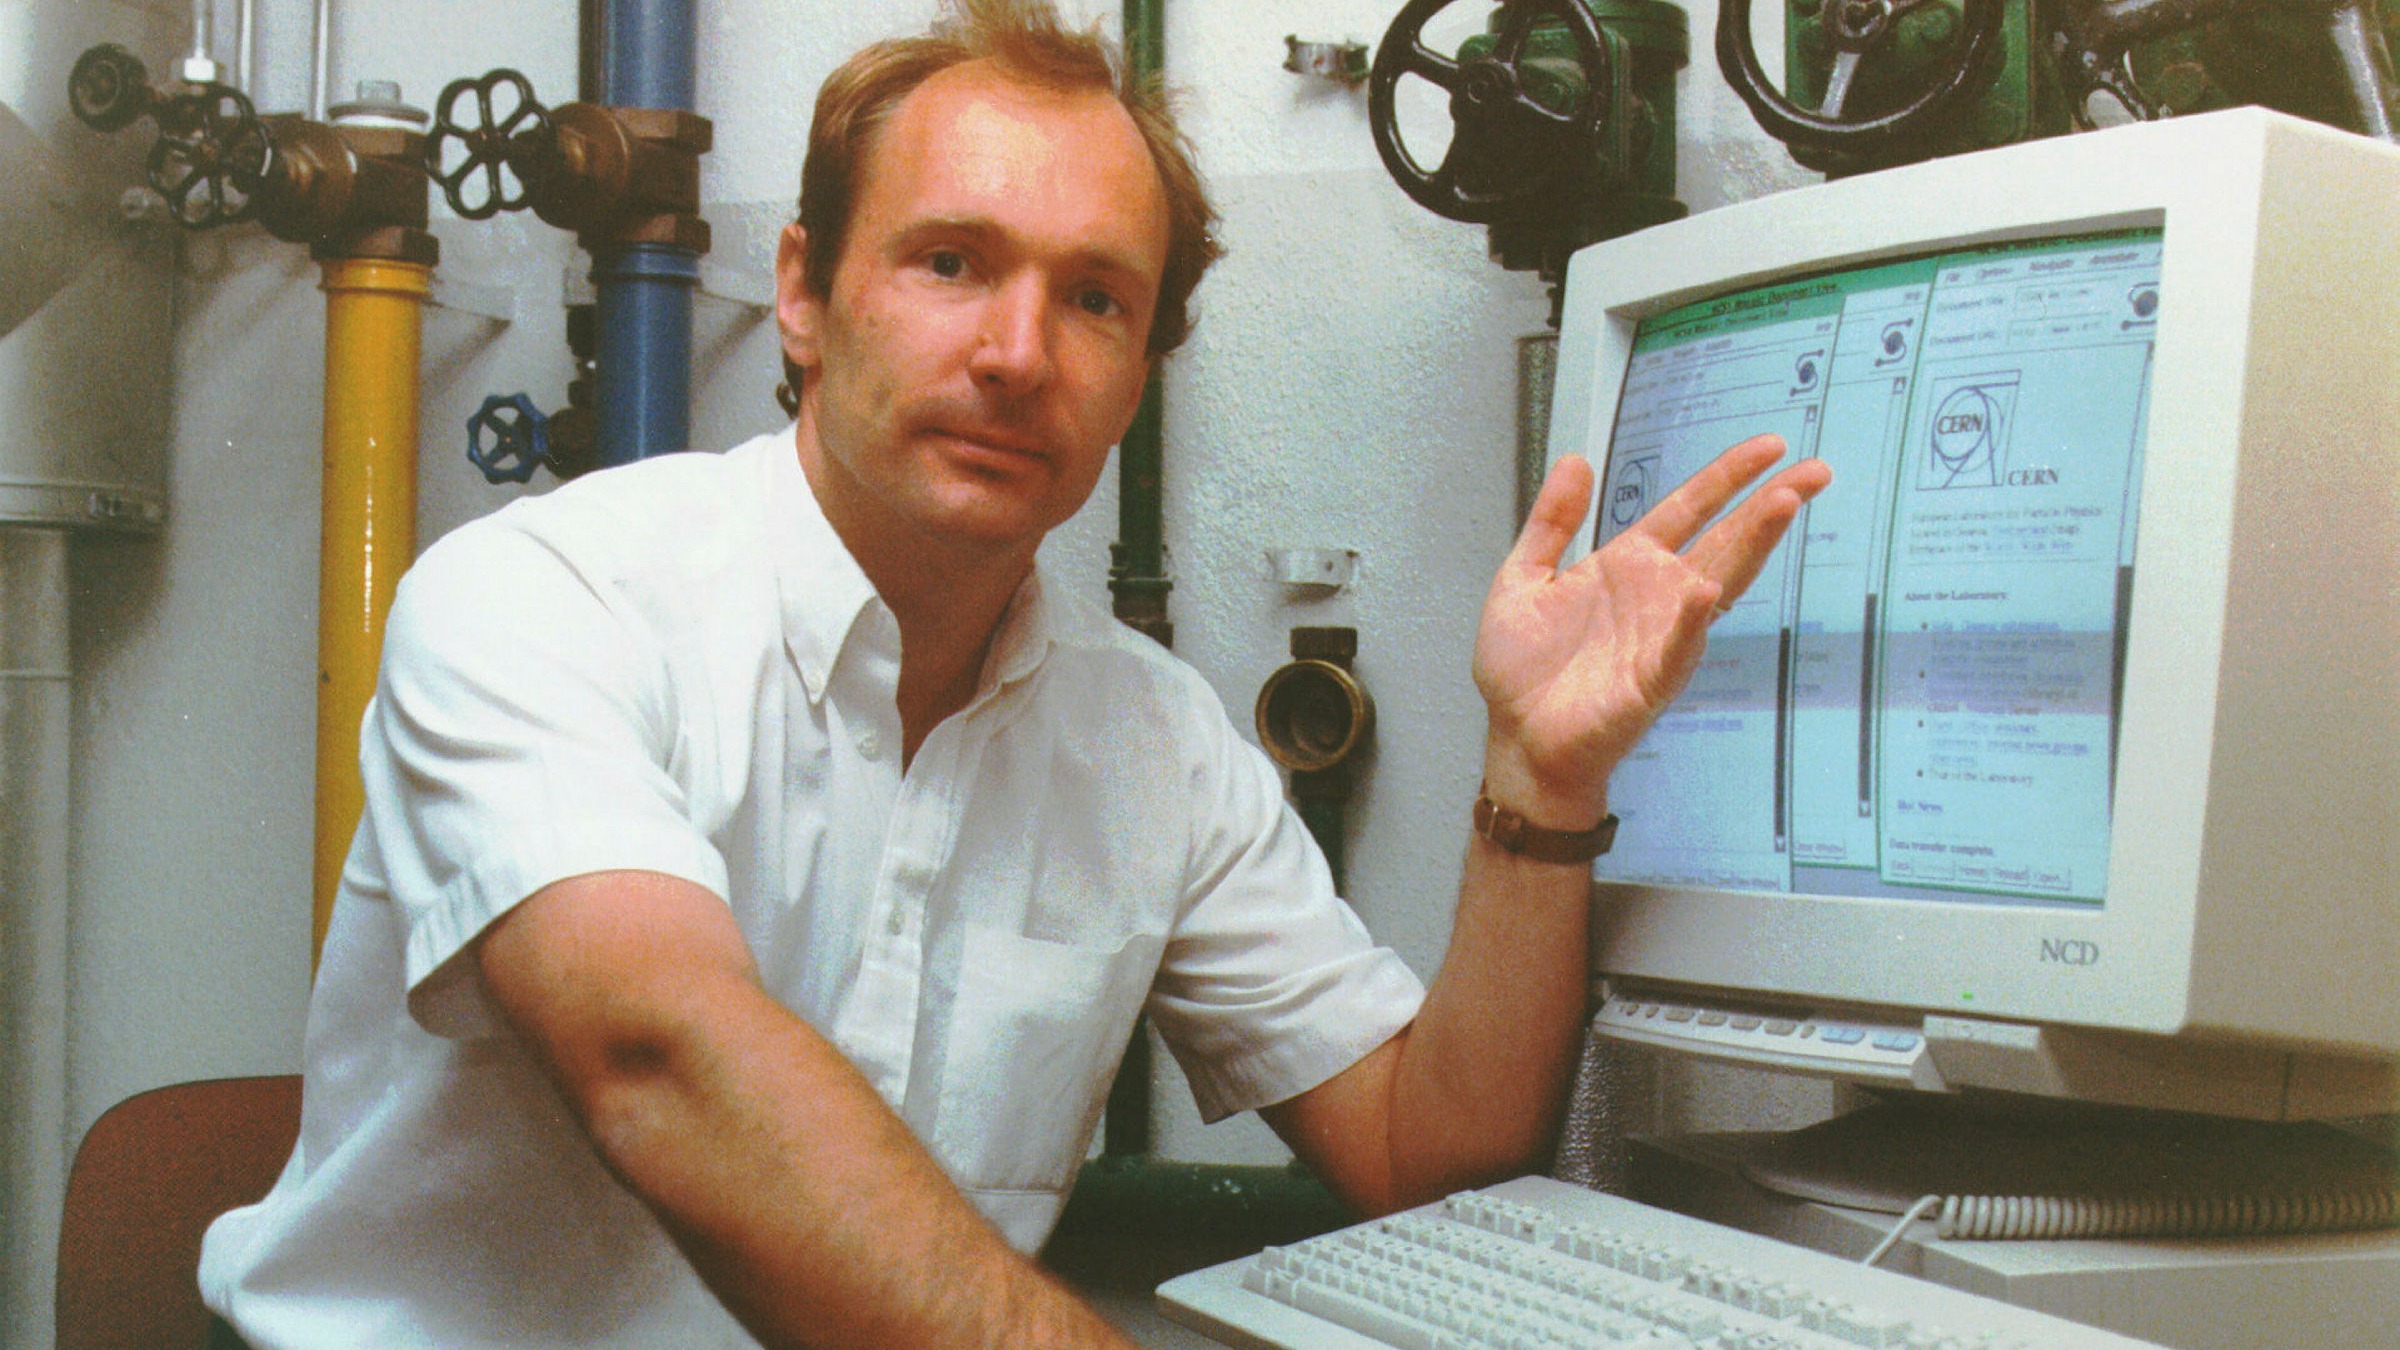 klem Certificaat Negen Tim Berners-Lee puts the web's beginnings for sale as an NFT | Financial  Times